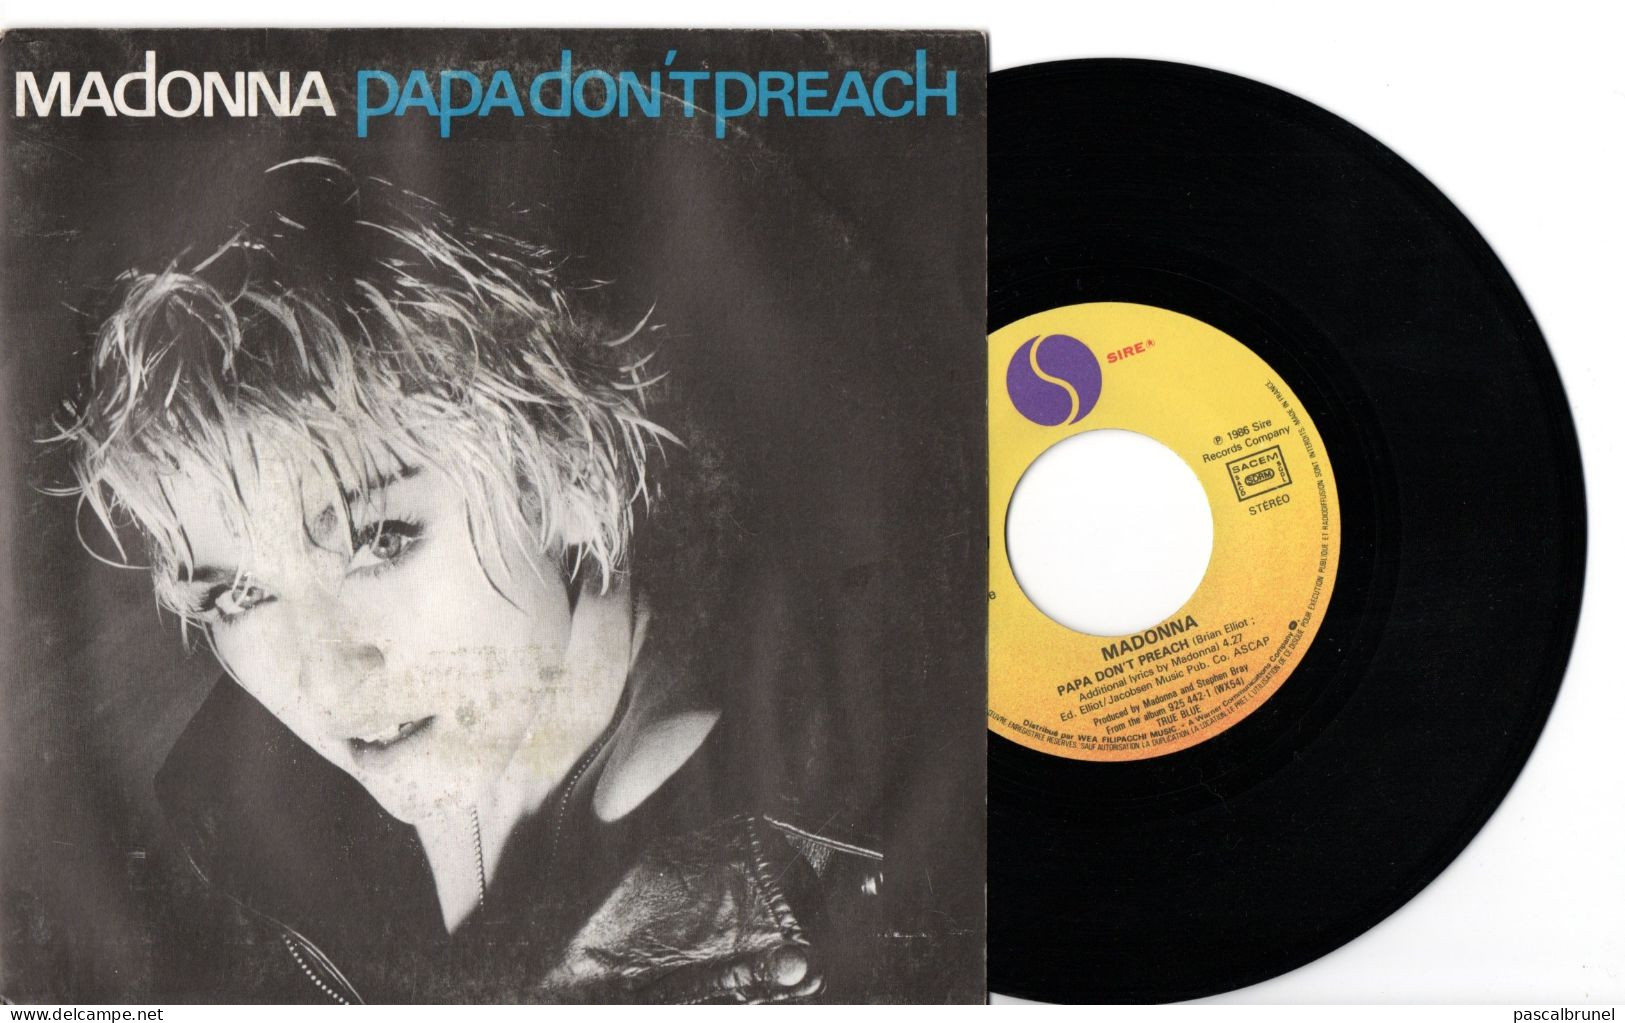 MADONNA - PAPA DON'T PREACH - Disco, Pop